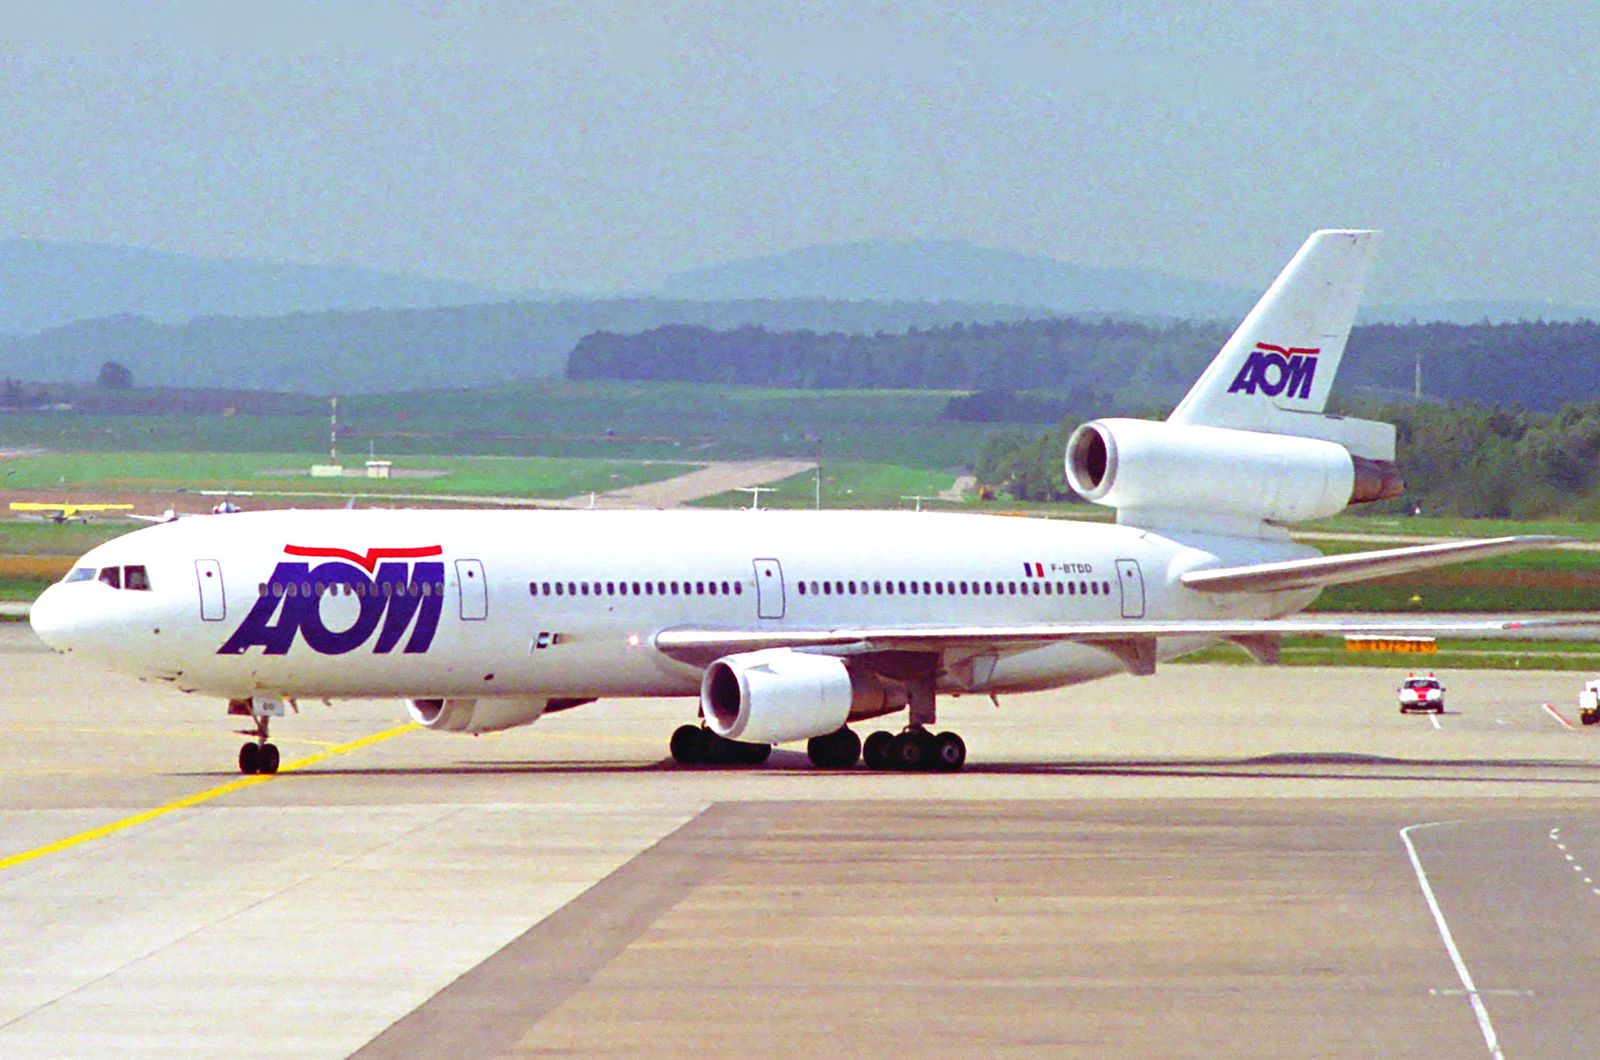 Entre 1998 et 2003 : la fin du rêve d'AOM © Aero Icarus from Zürich, Switzerland, Wikimedia Commons